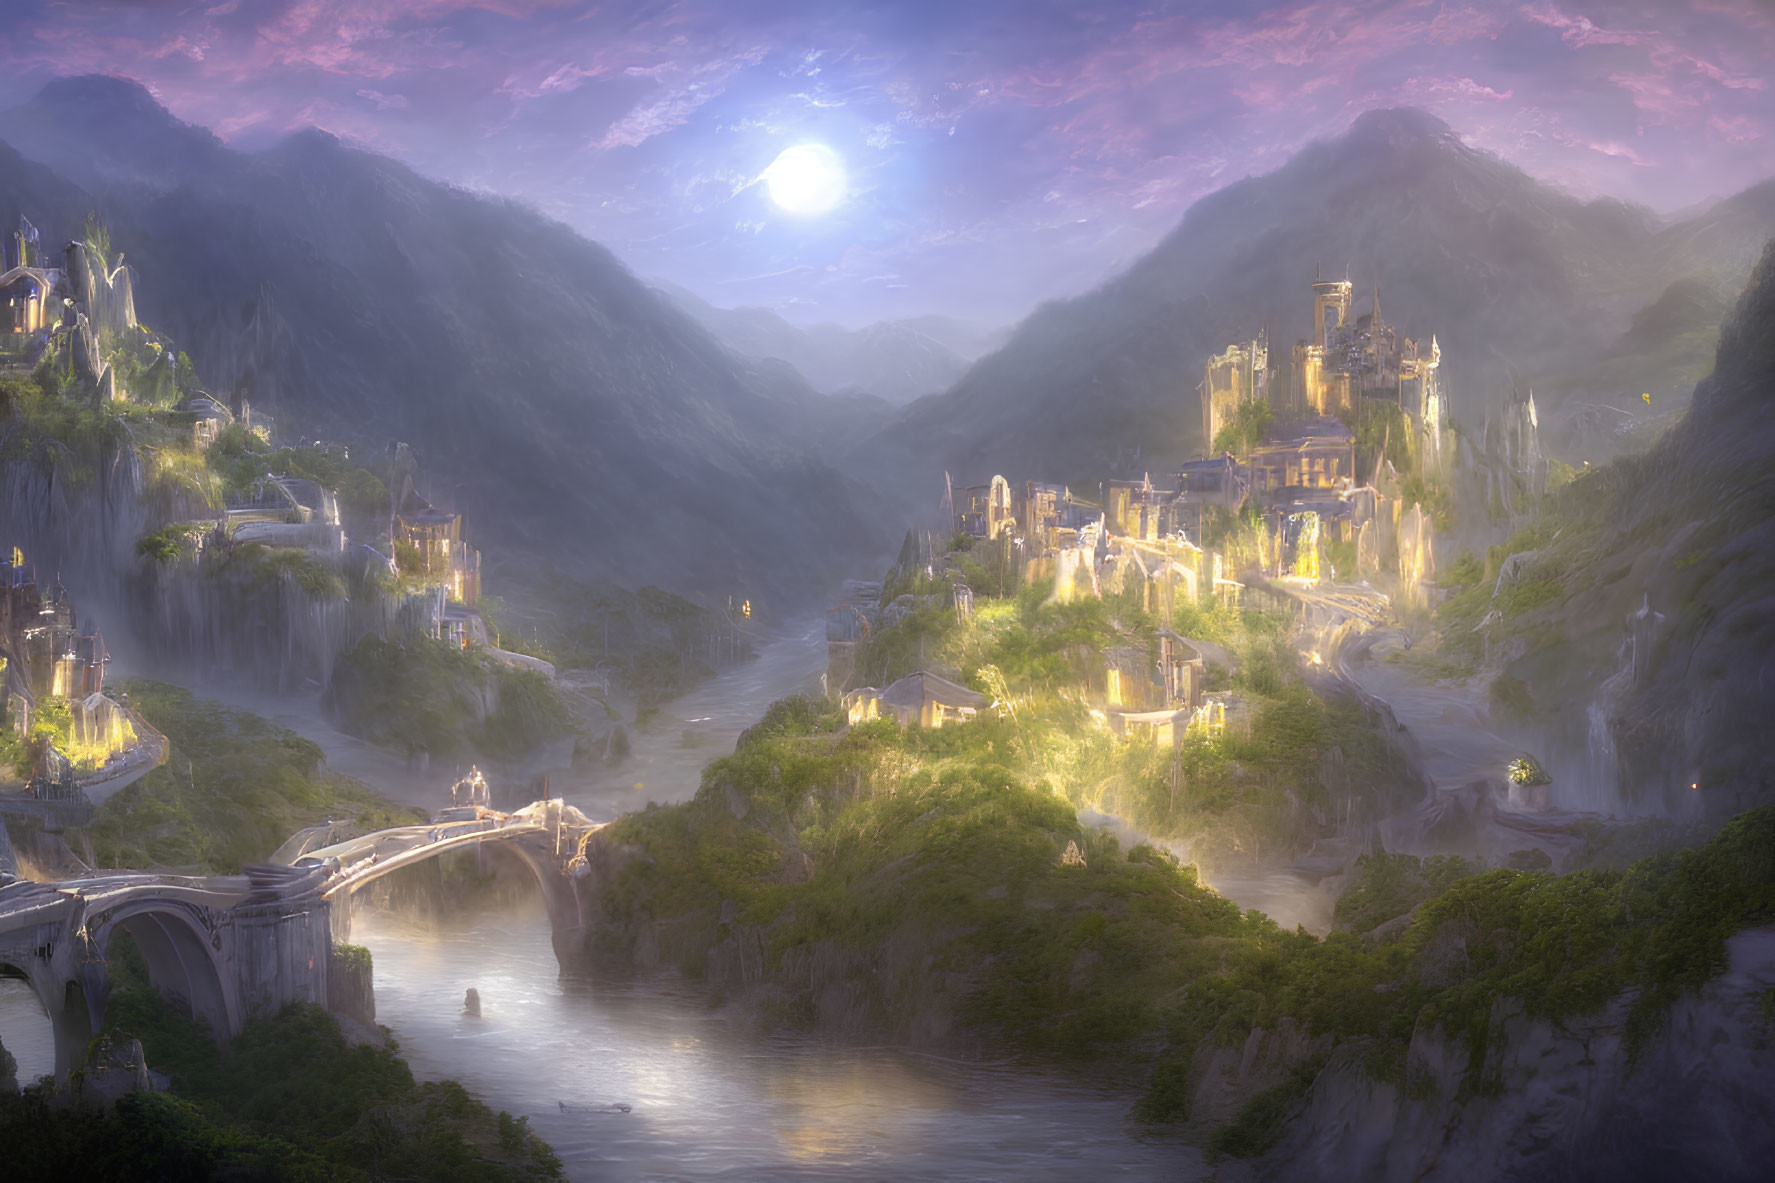 Luminous cityscape nestled in mountains under moonlit sky